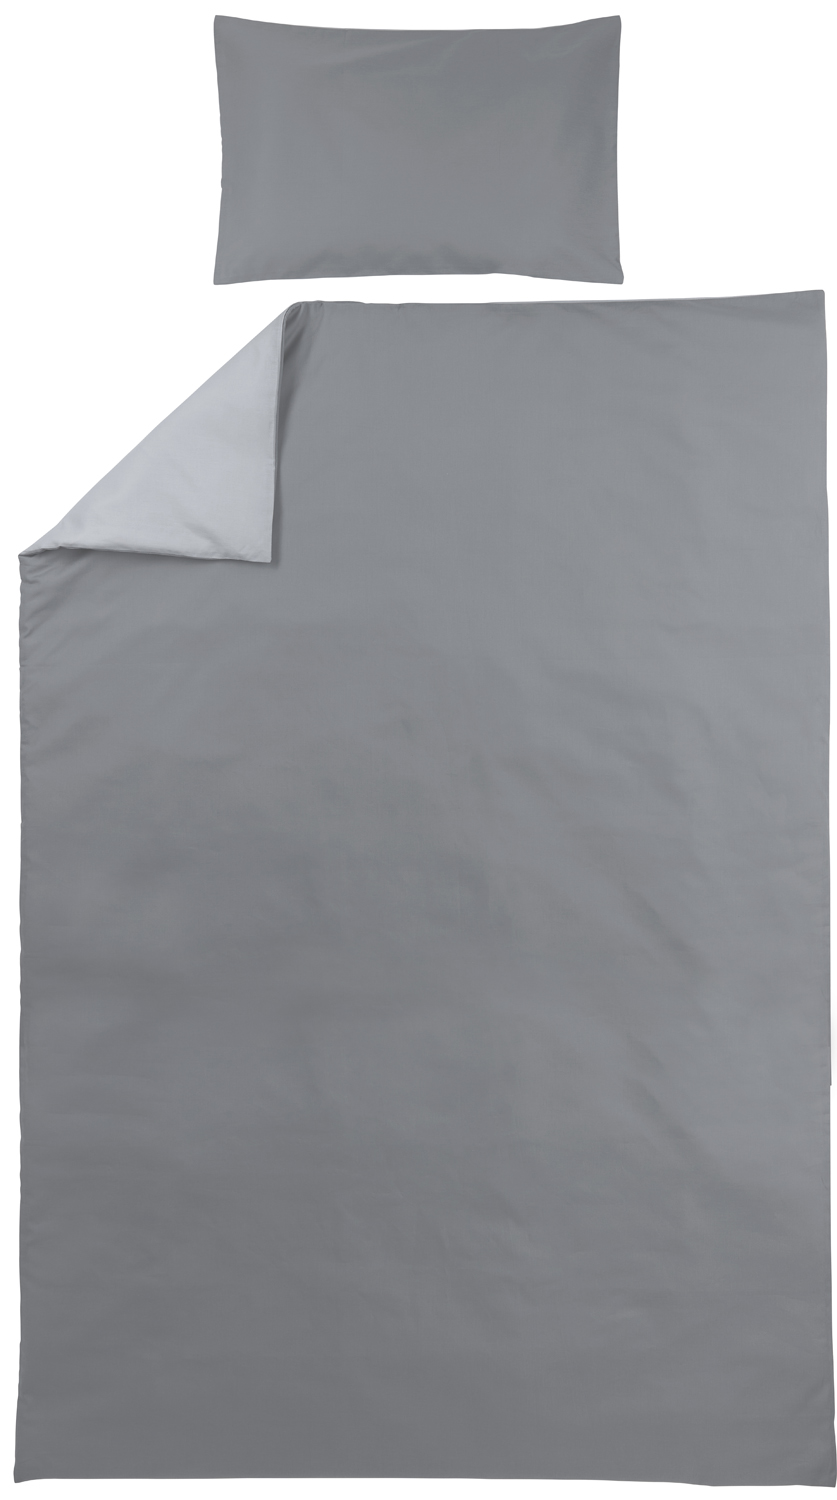 Duvet cover 1-Pers. Uni - grey/light grey - 140x200/220cm